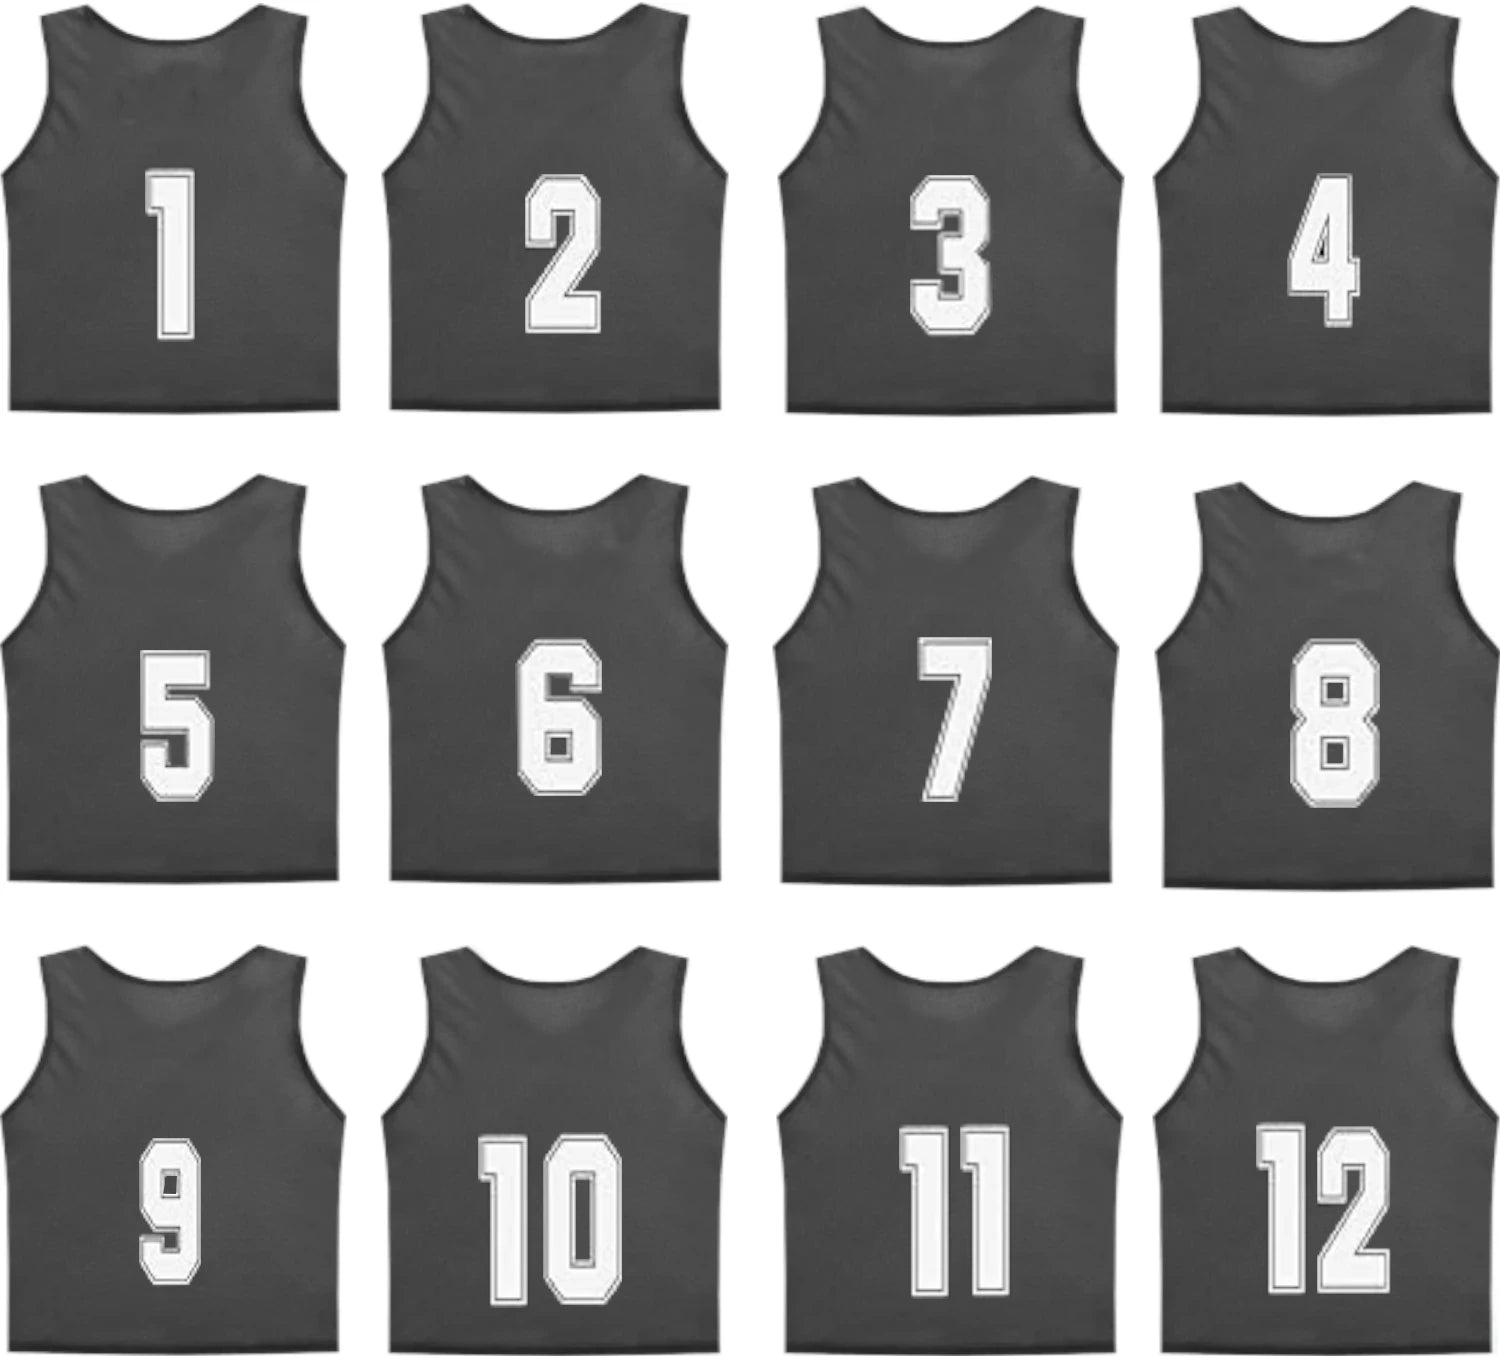 Buy black Team Practice Scrimmage Vests Sport Pinnies Training Bibs Numbered (1-12)